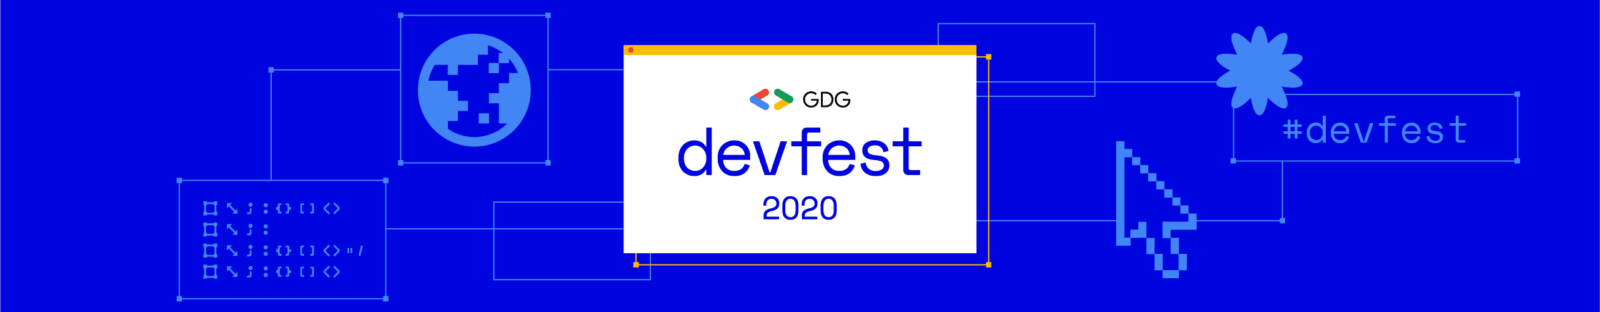 GDG DevFest 2020